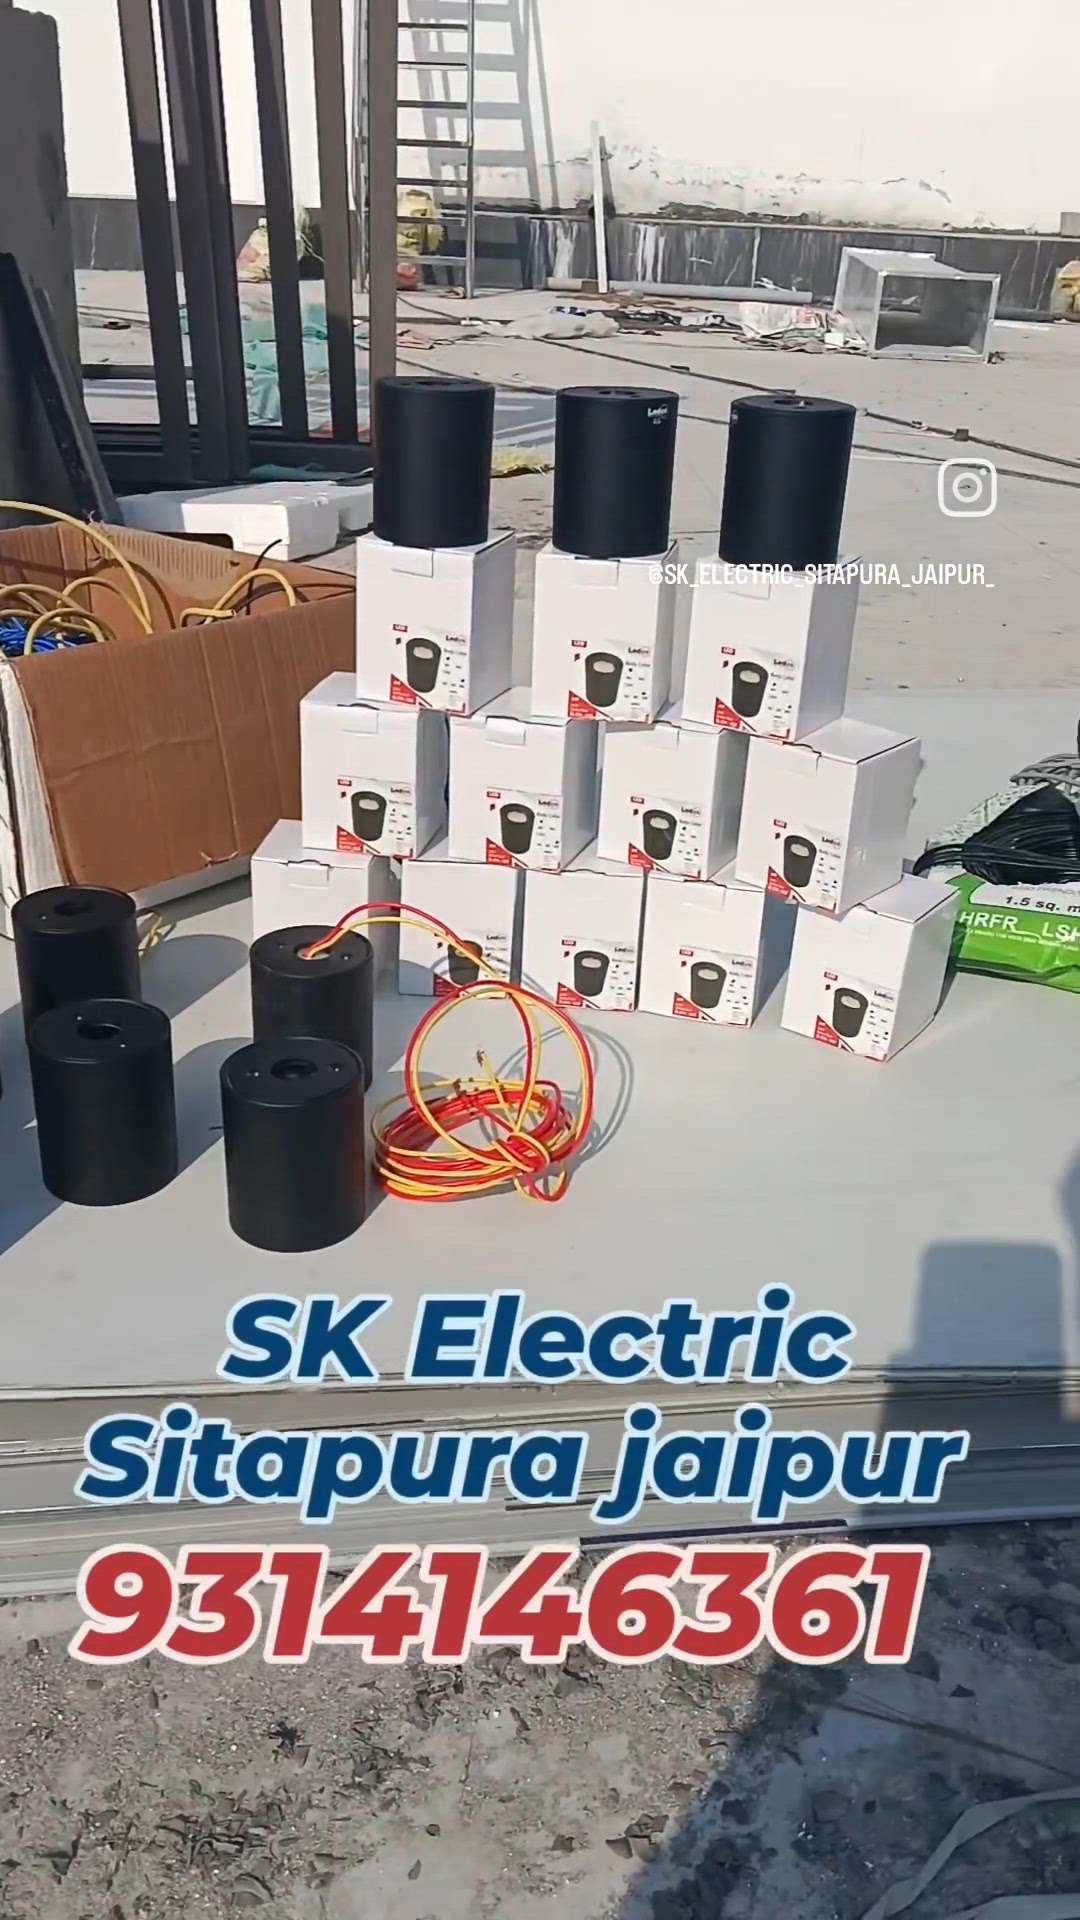 #SK #Electric #Sitapura #jaipur
9314146361